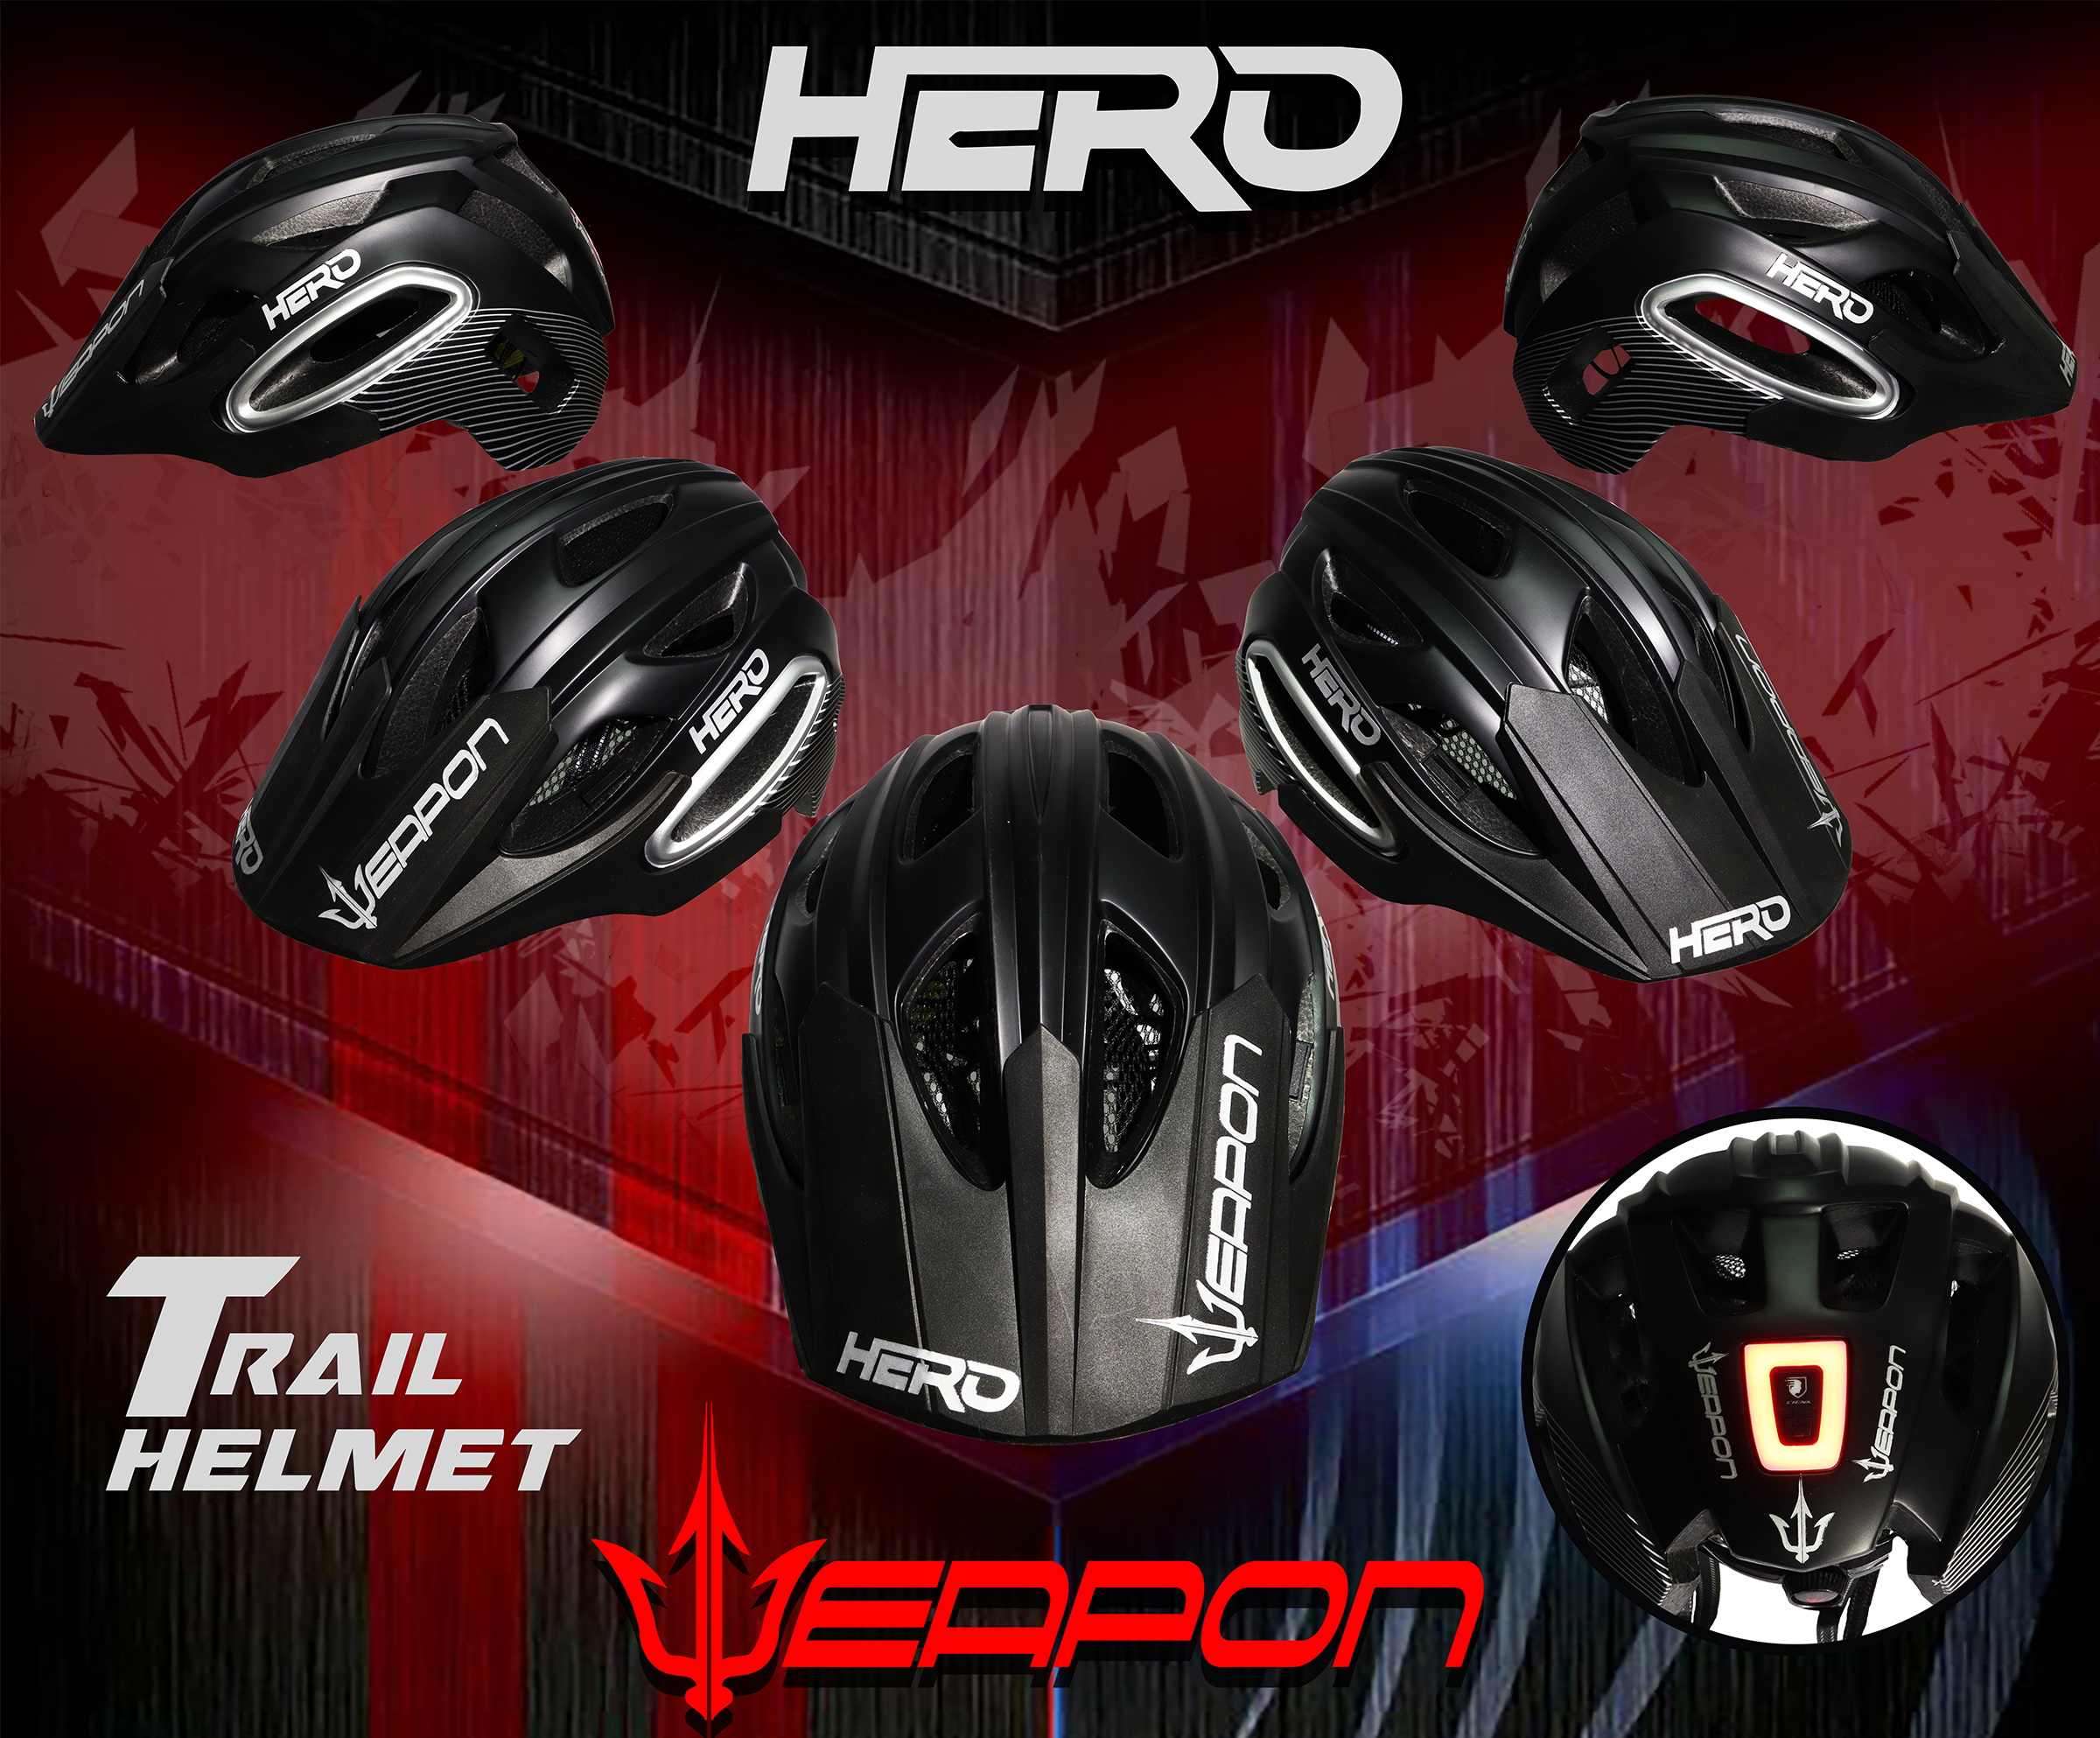 hero-helmet-ads1